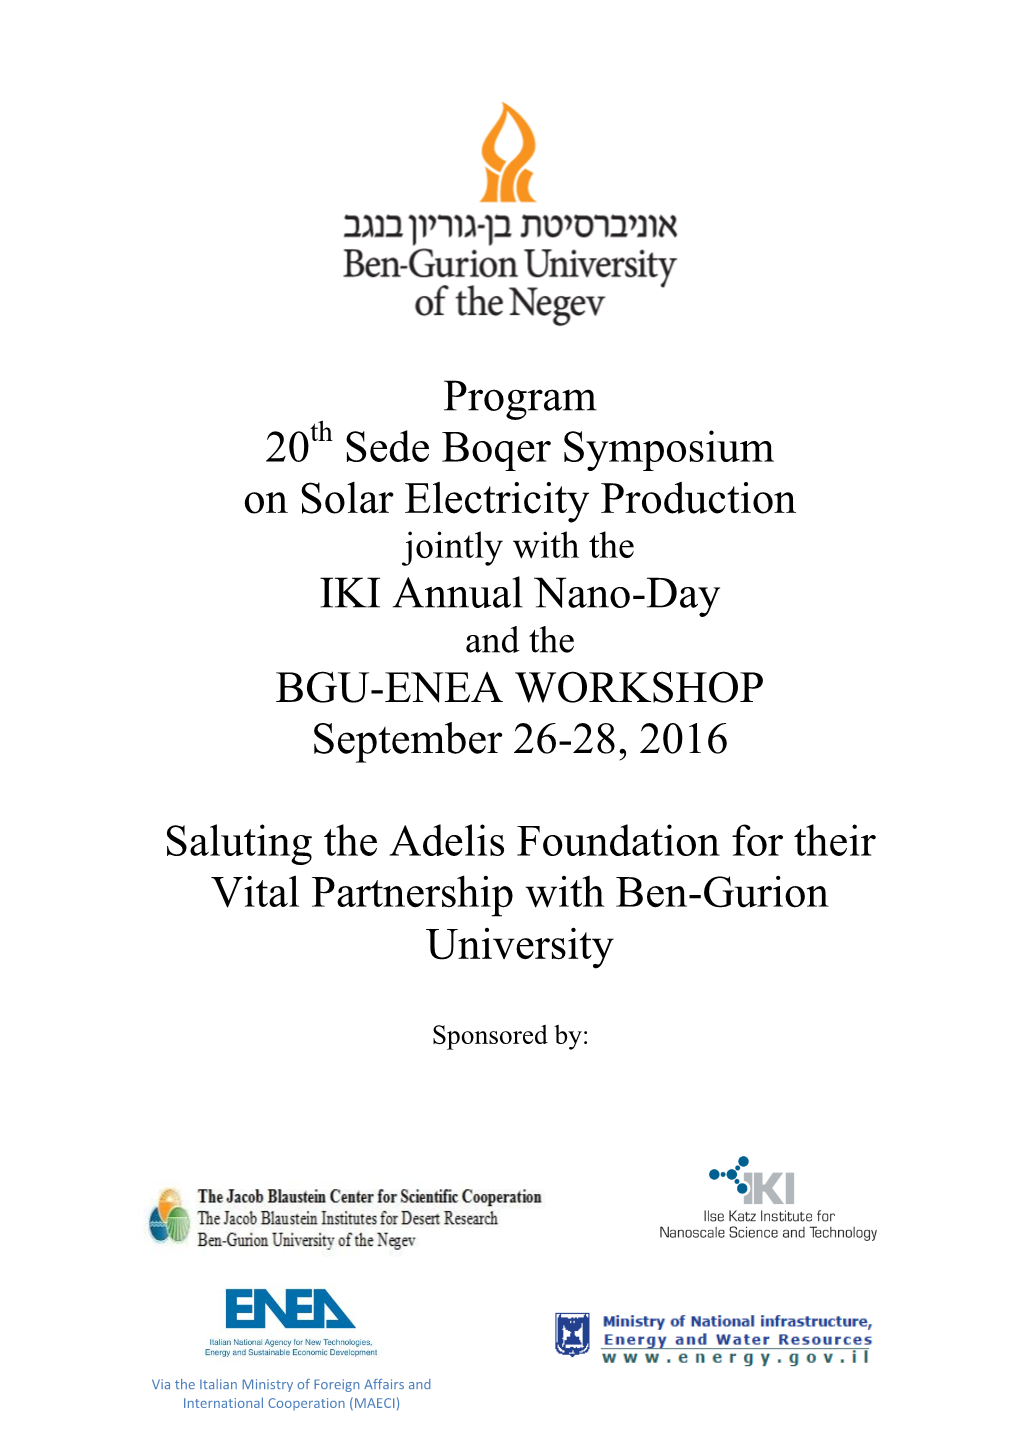 Program 20 Sede Boqer Symposium on Solar Electricity Production IKI